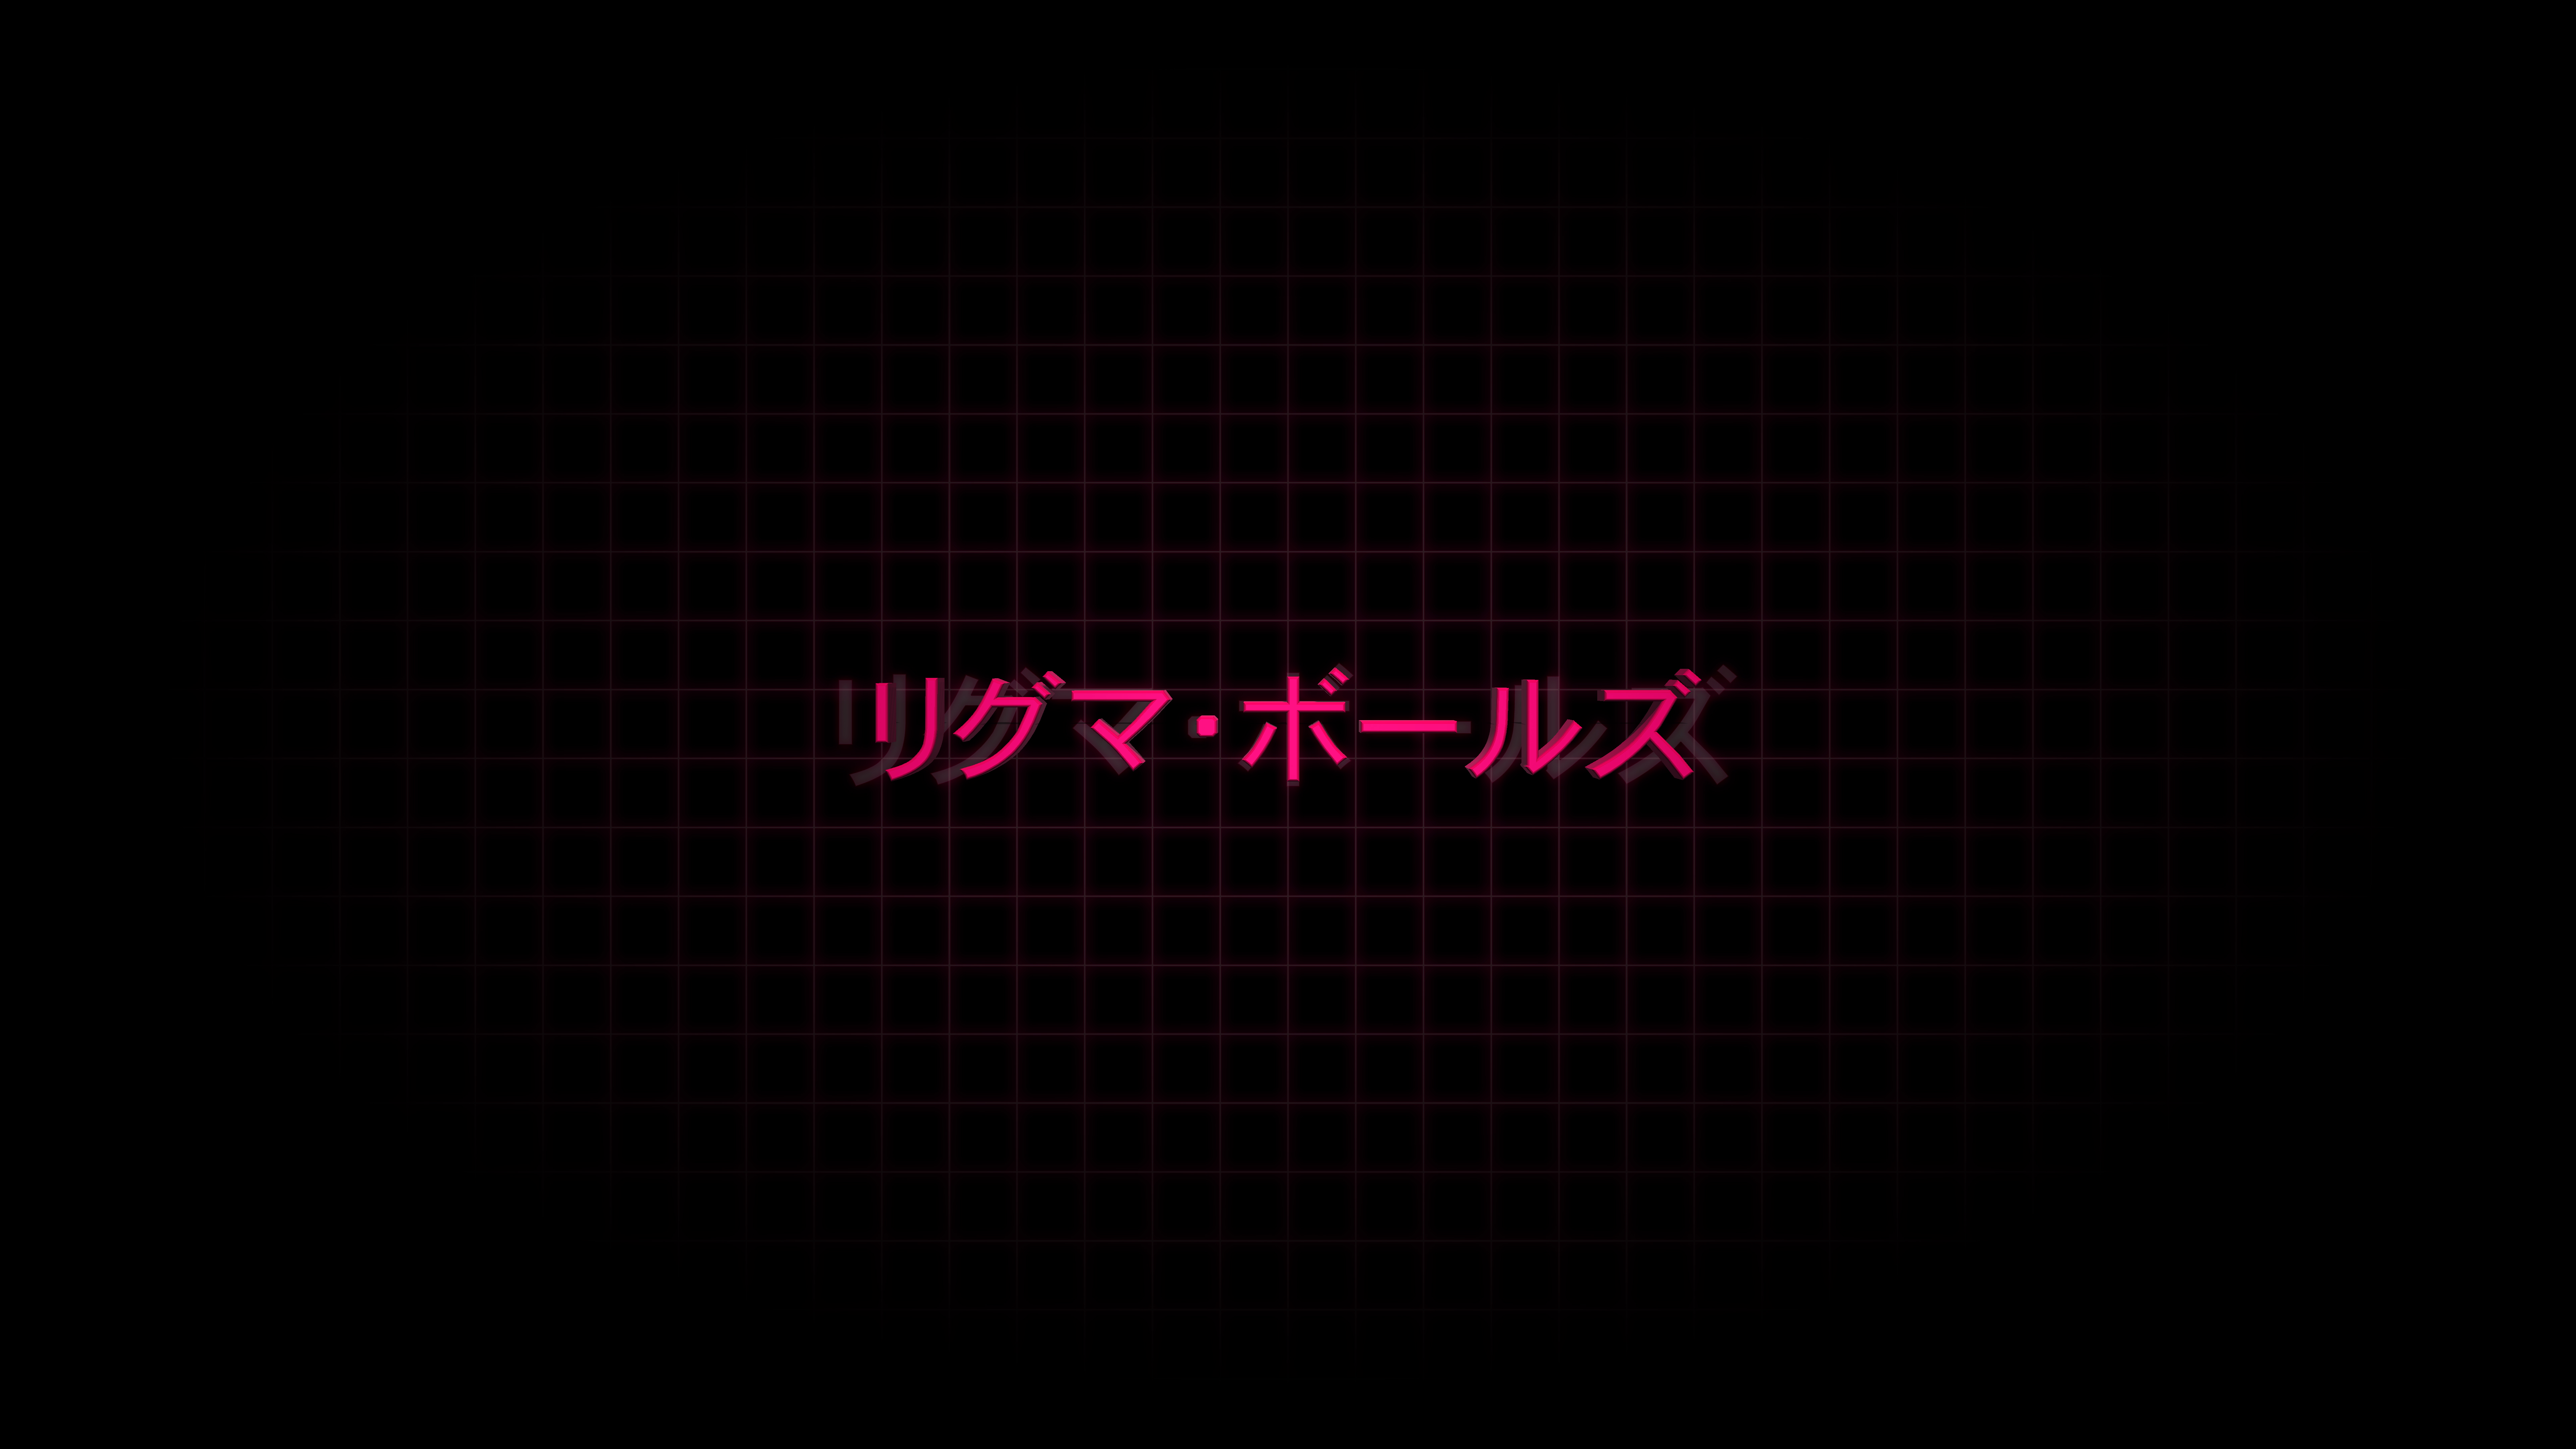 General 7680x4320 grid Japanese pink black background digital art simple background